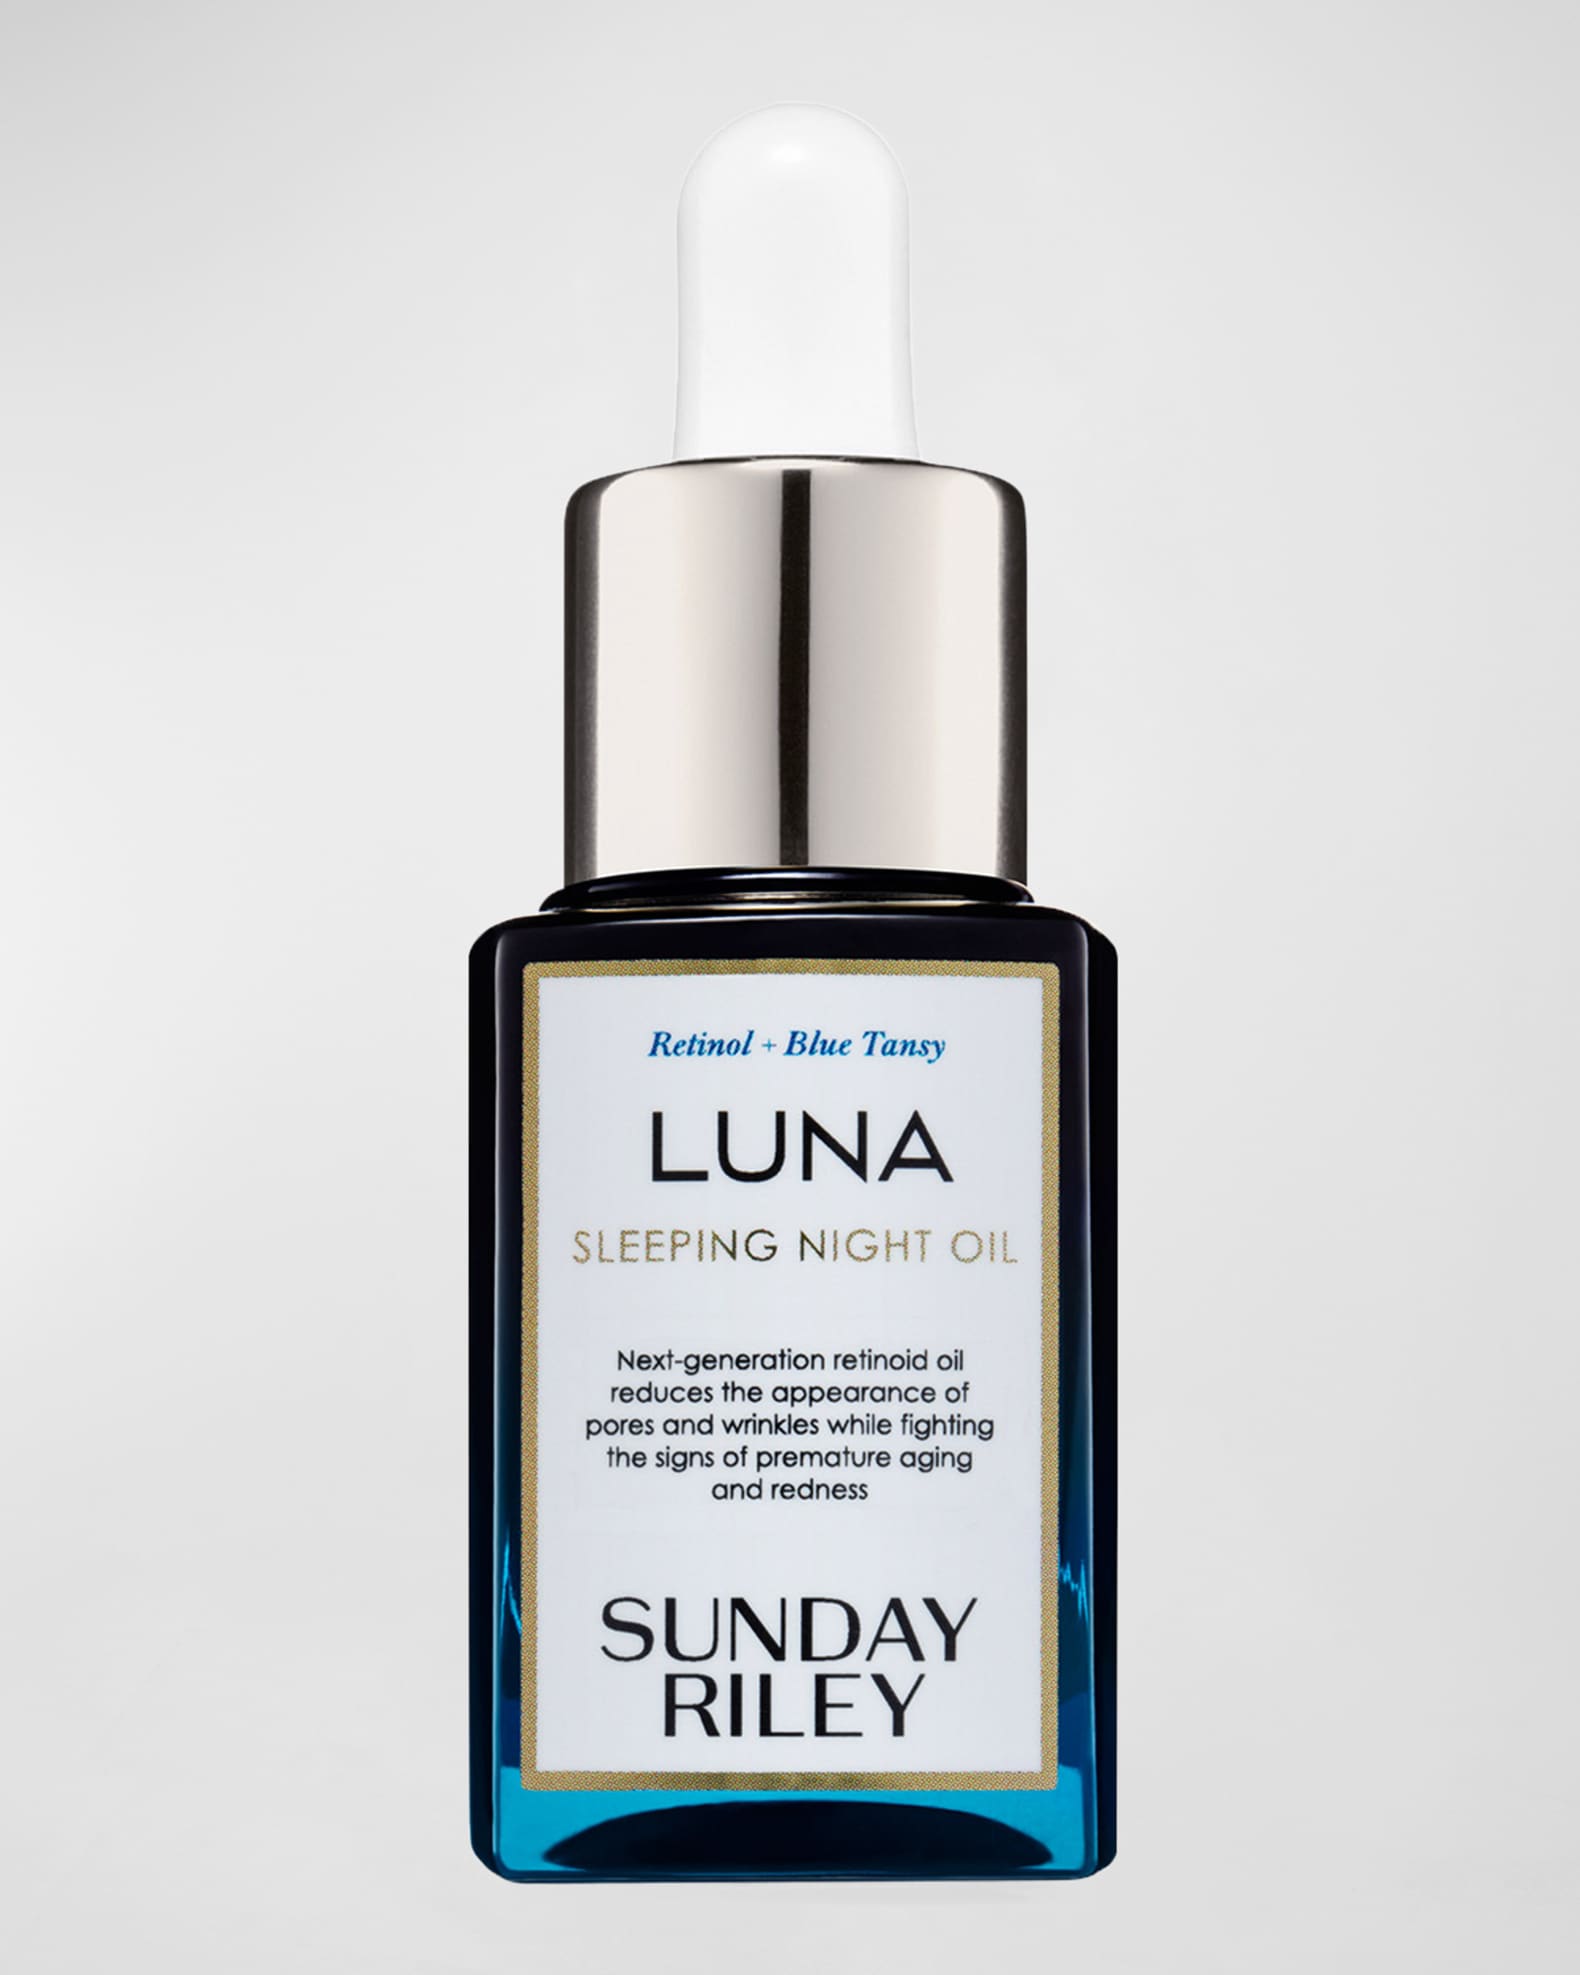 Loewe Luna: In the Presence of Beauty